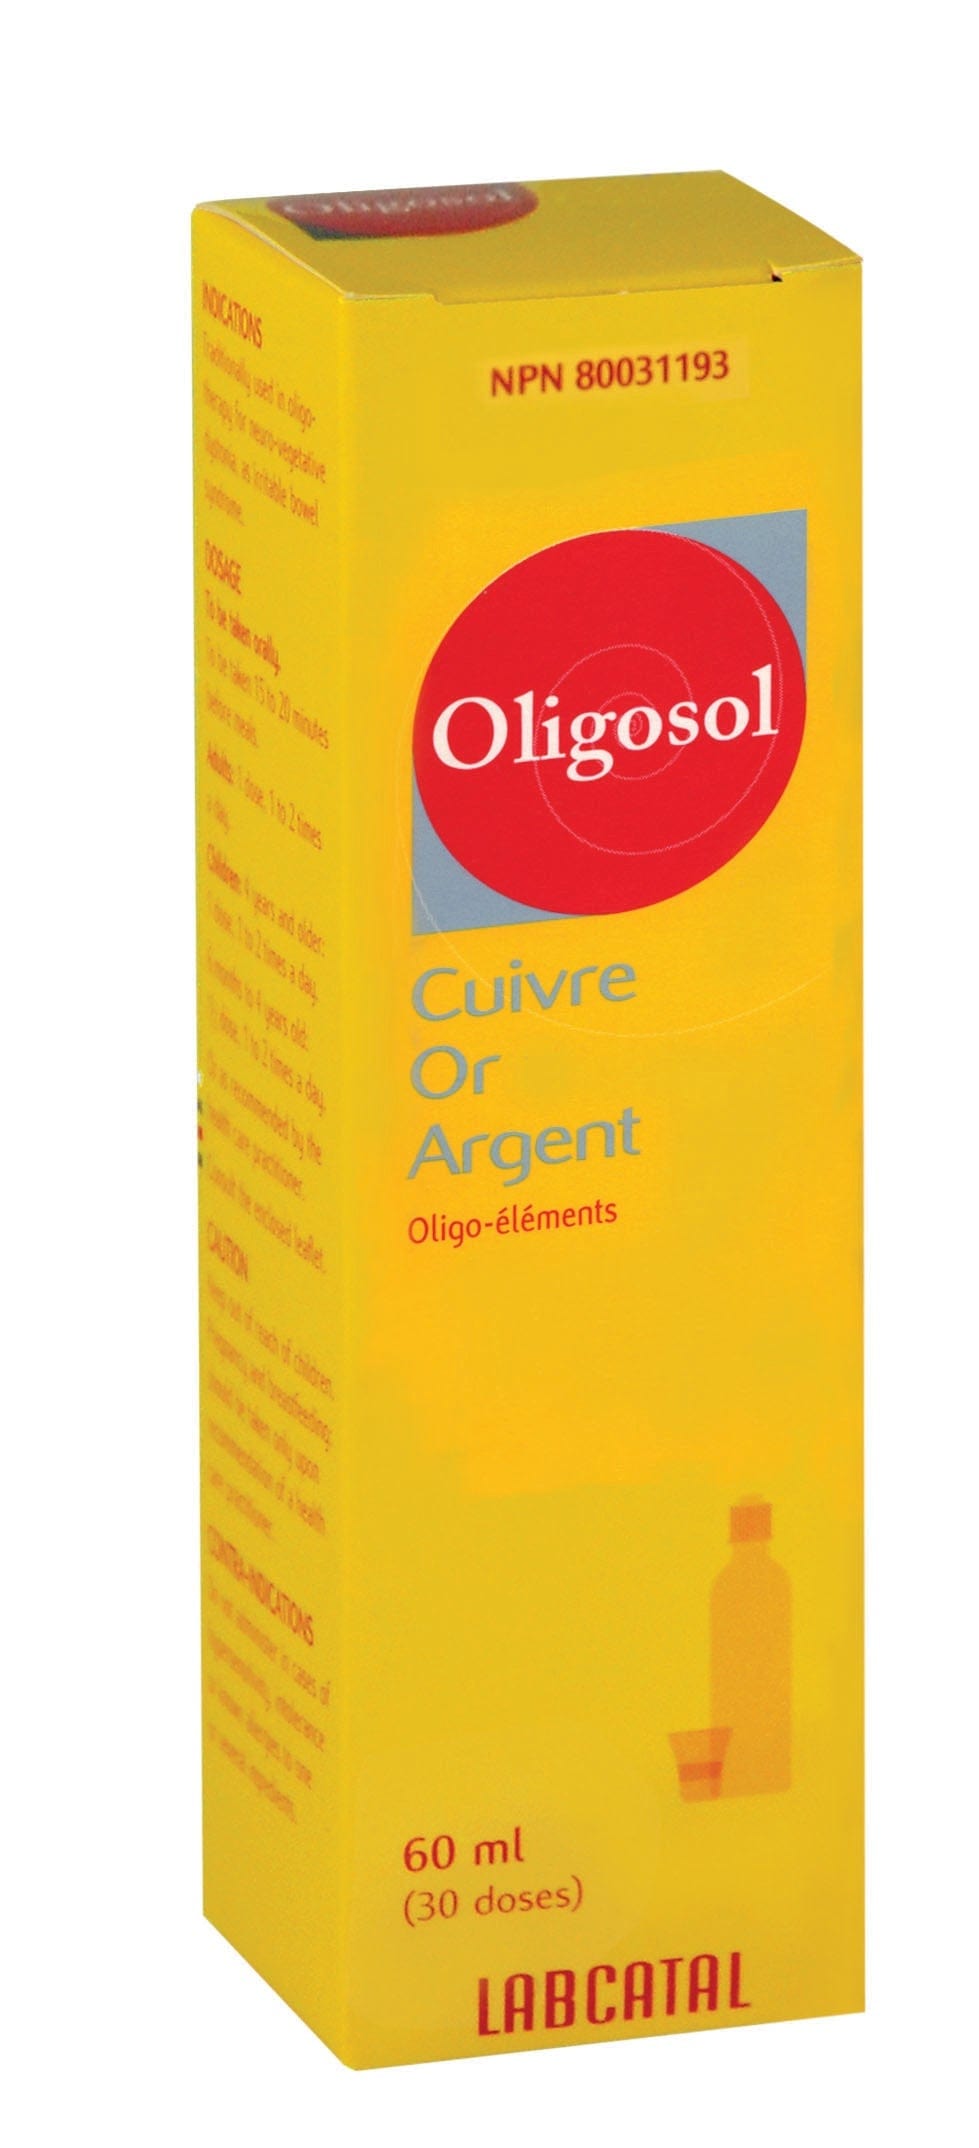 Oligosol Cuivre Or Argent 30 Doses 60ml